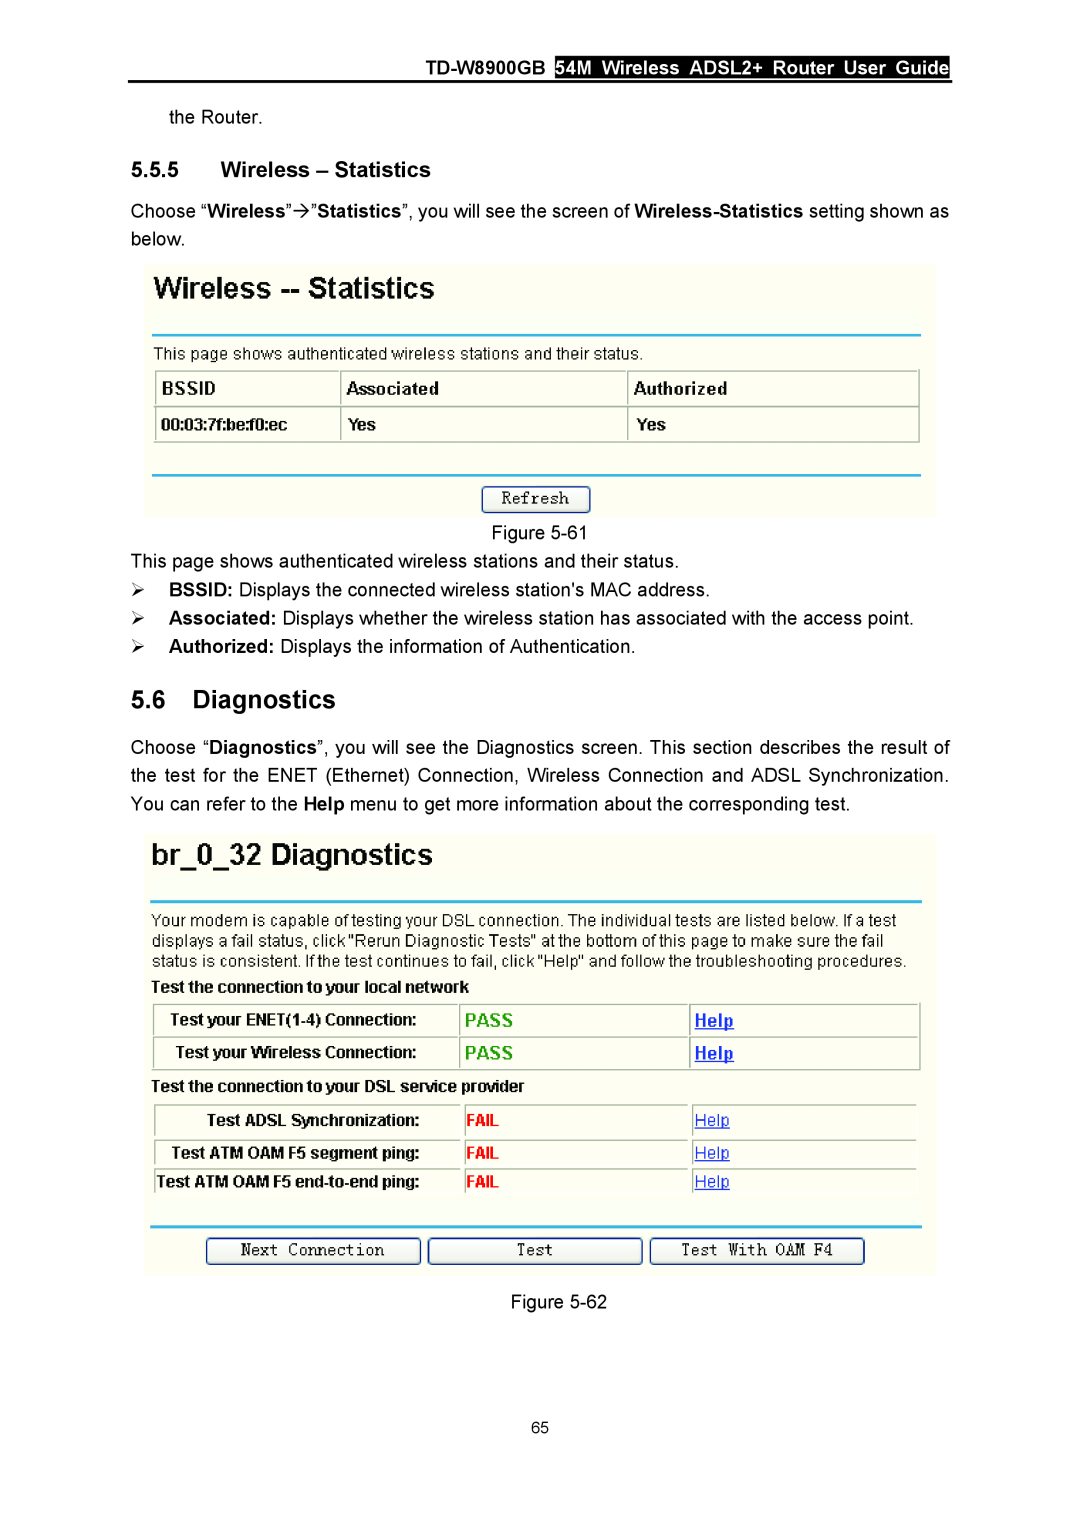 TP-Link manual Diagnostics, Wireless - Statistics, TD-W8900GB 54M Wireless ADSL2+ Router User Guide 